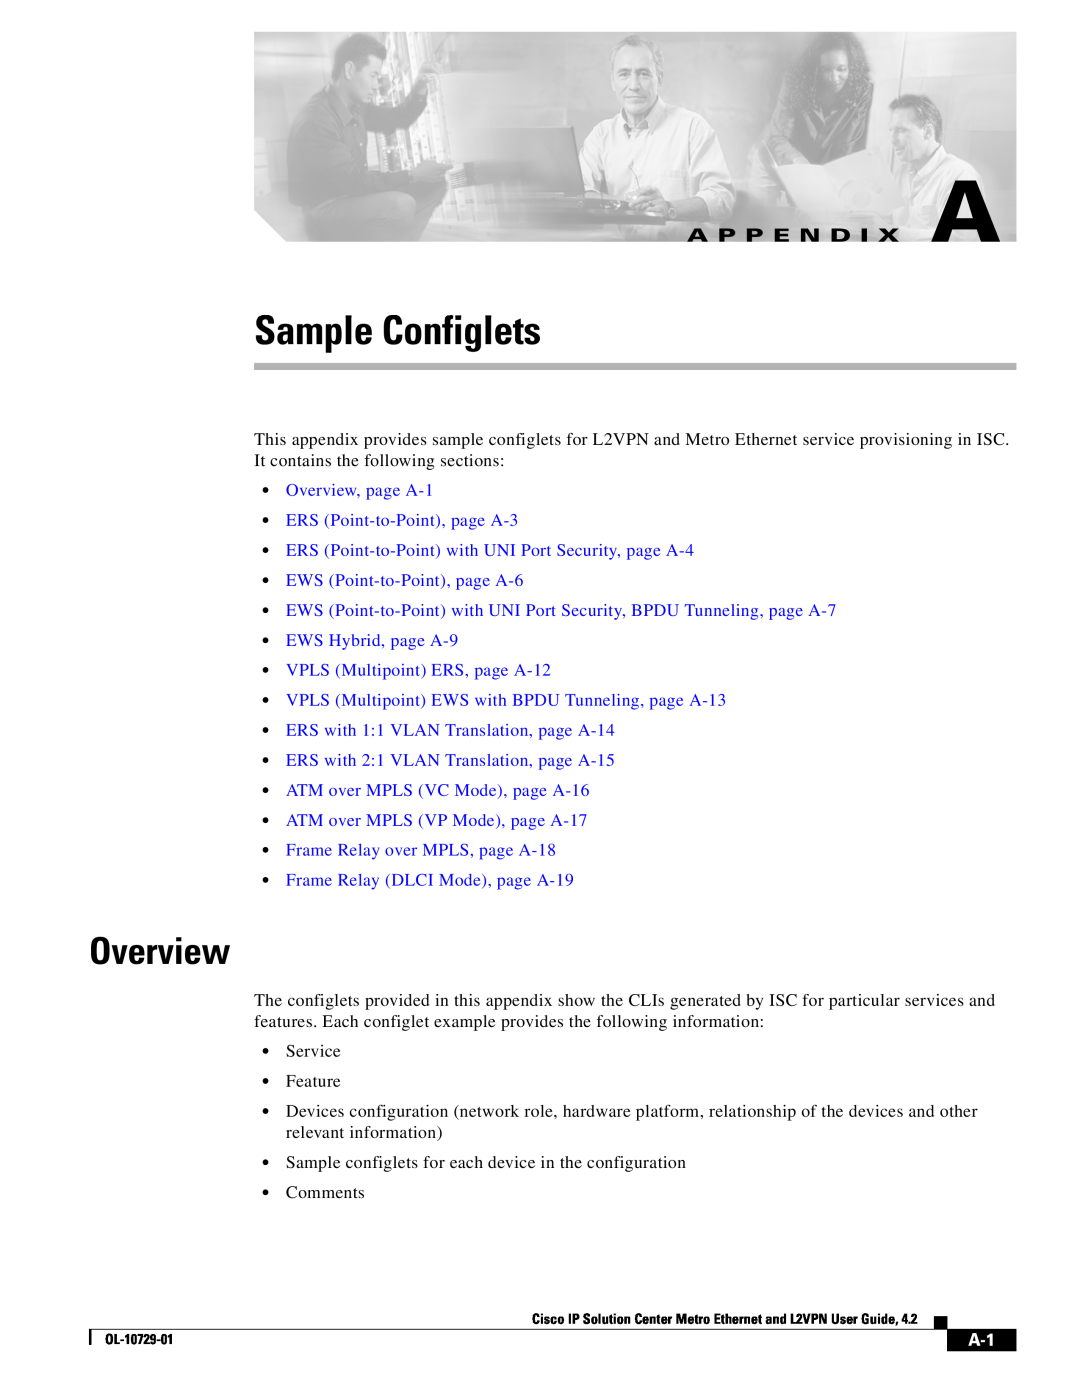 Cisco Systems OL-10729-01 appendix Overview, Sample Configlets, A P P E N D I X A 